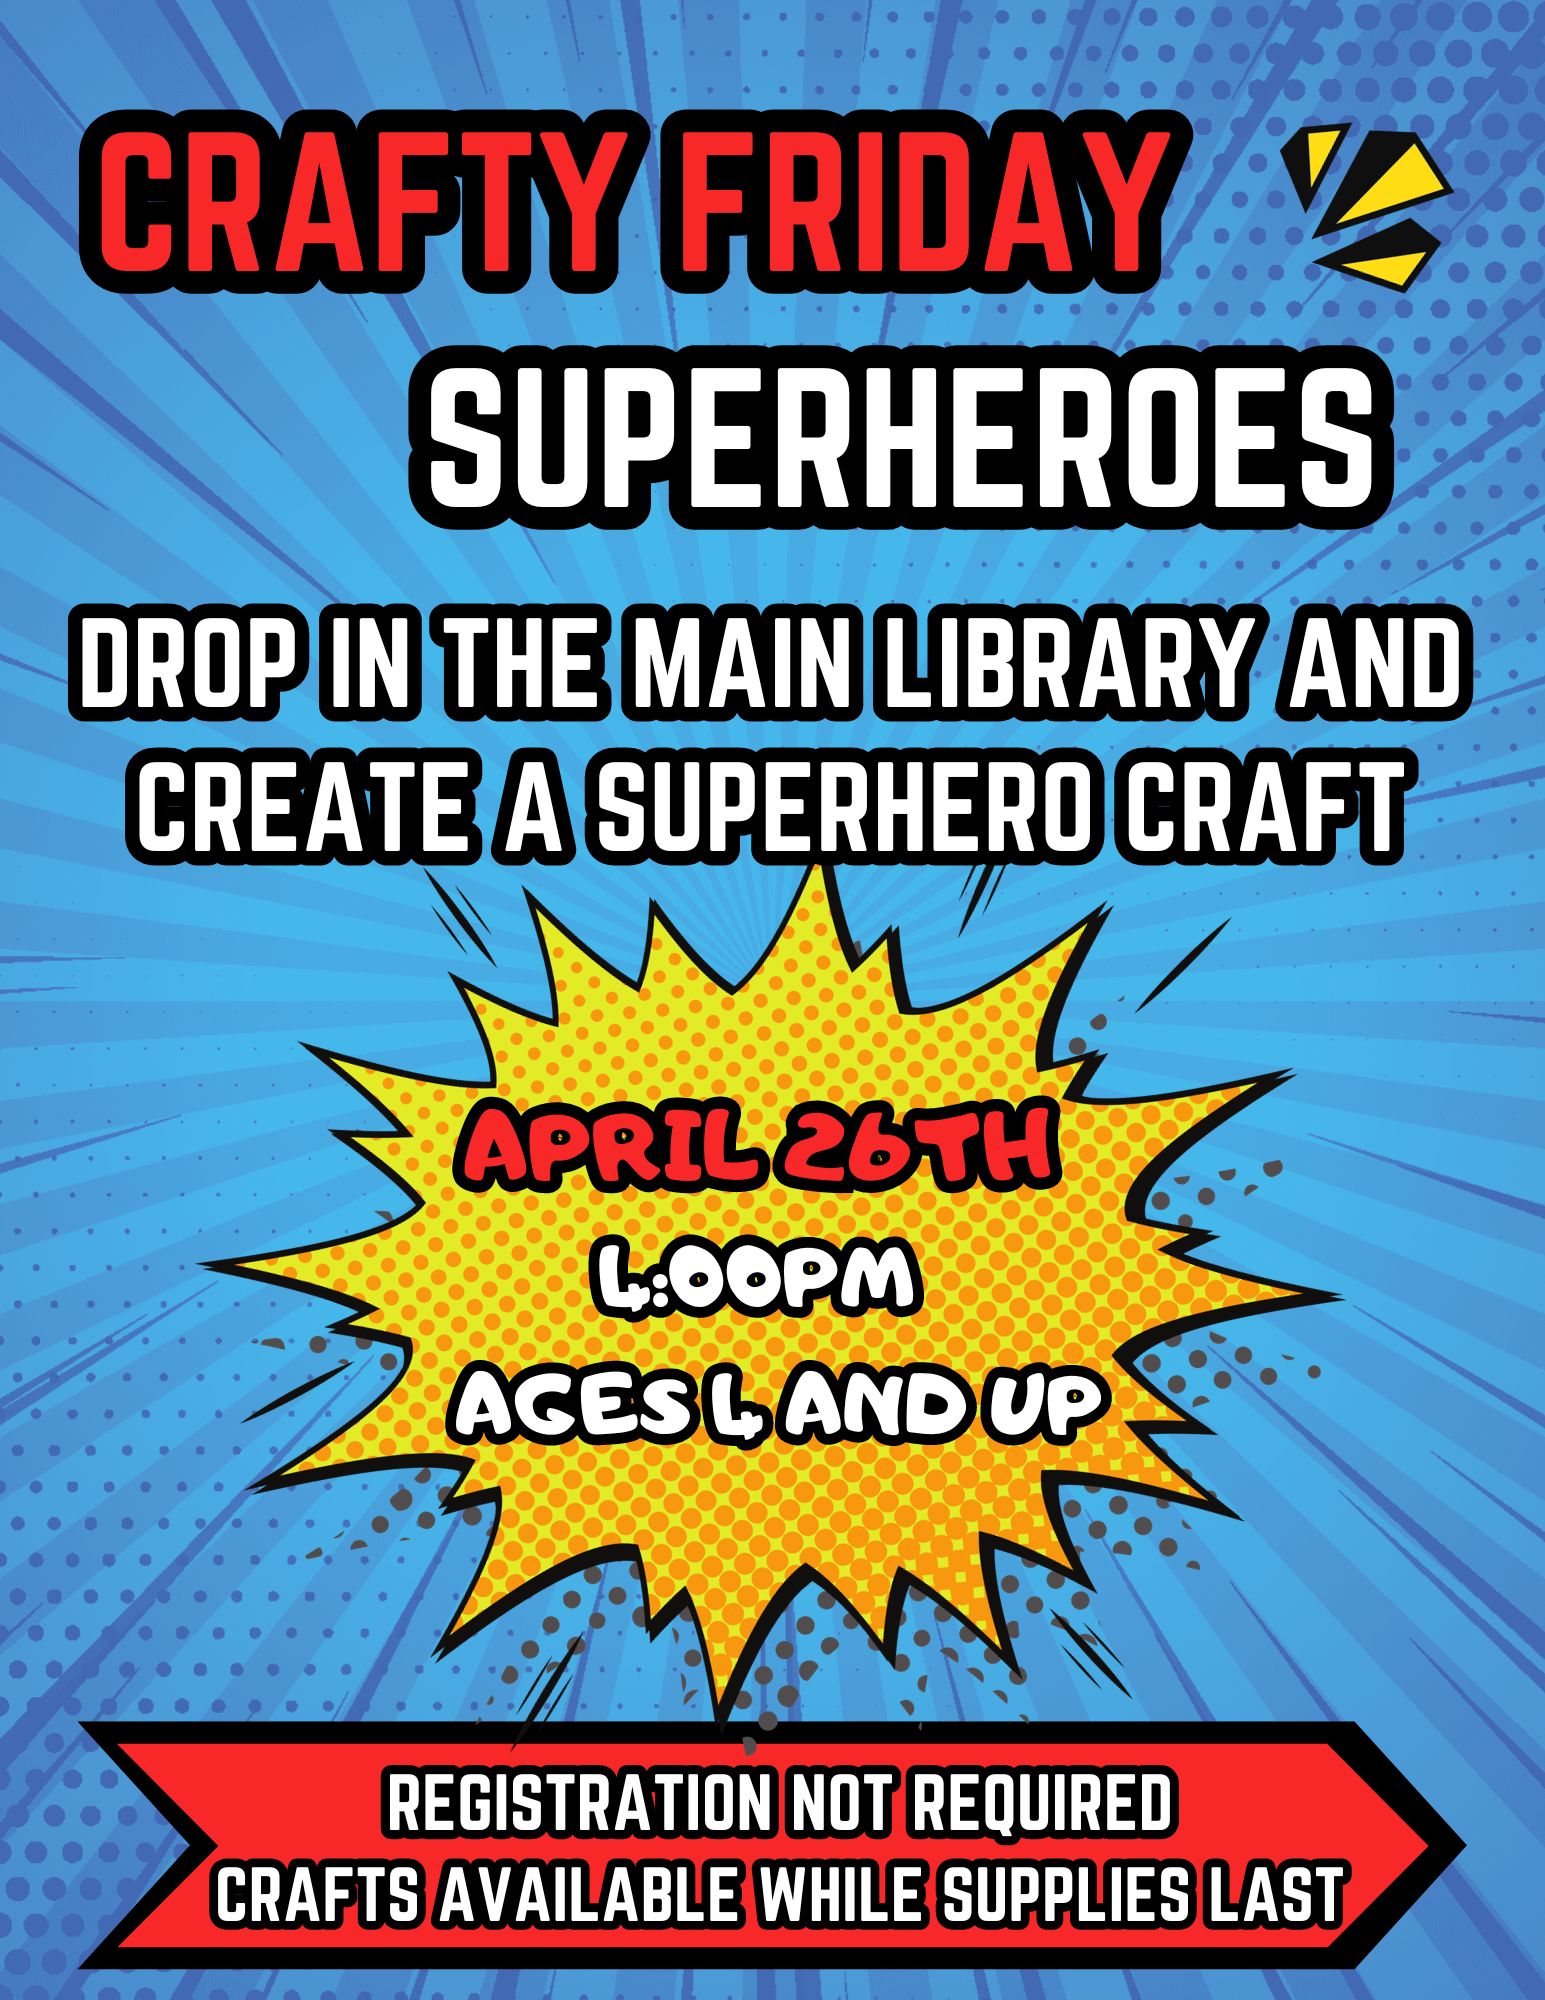 Crafty Friday: Superheroes